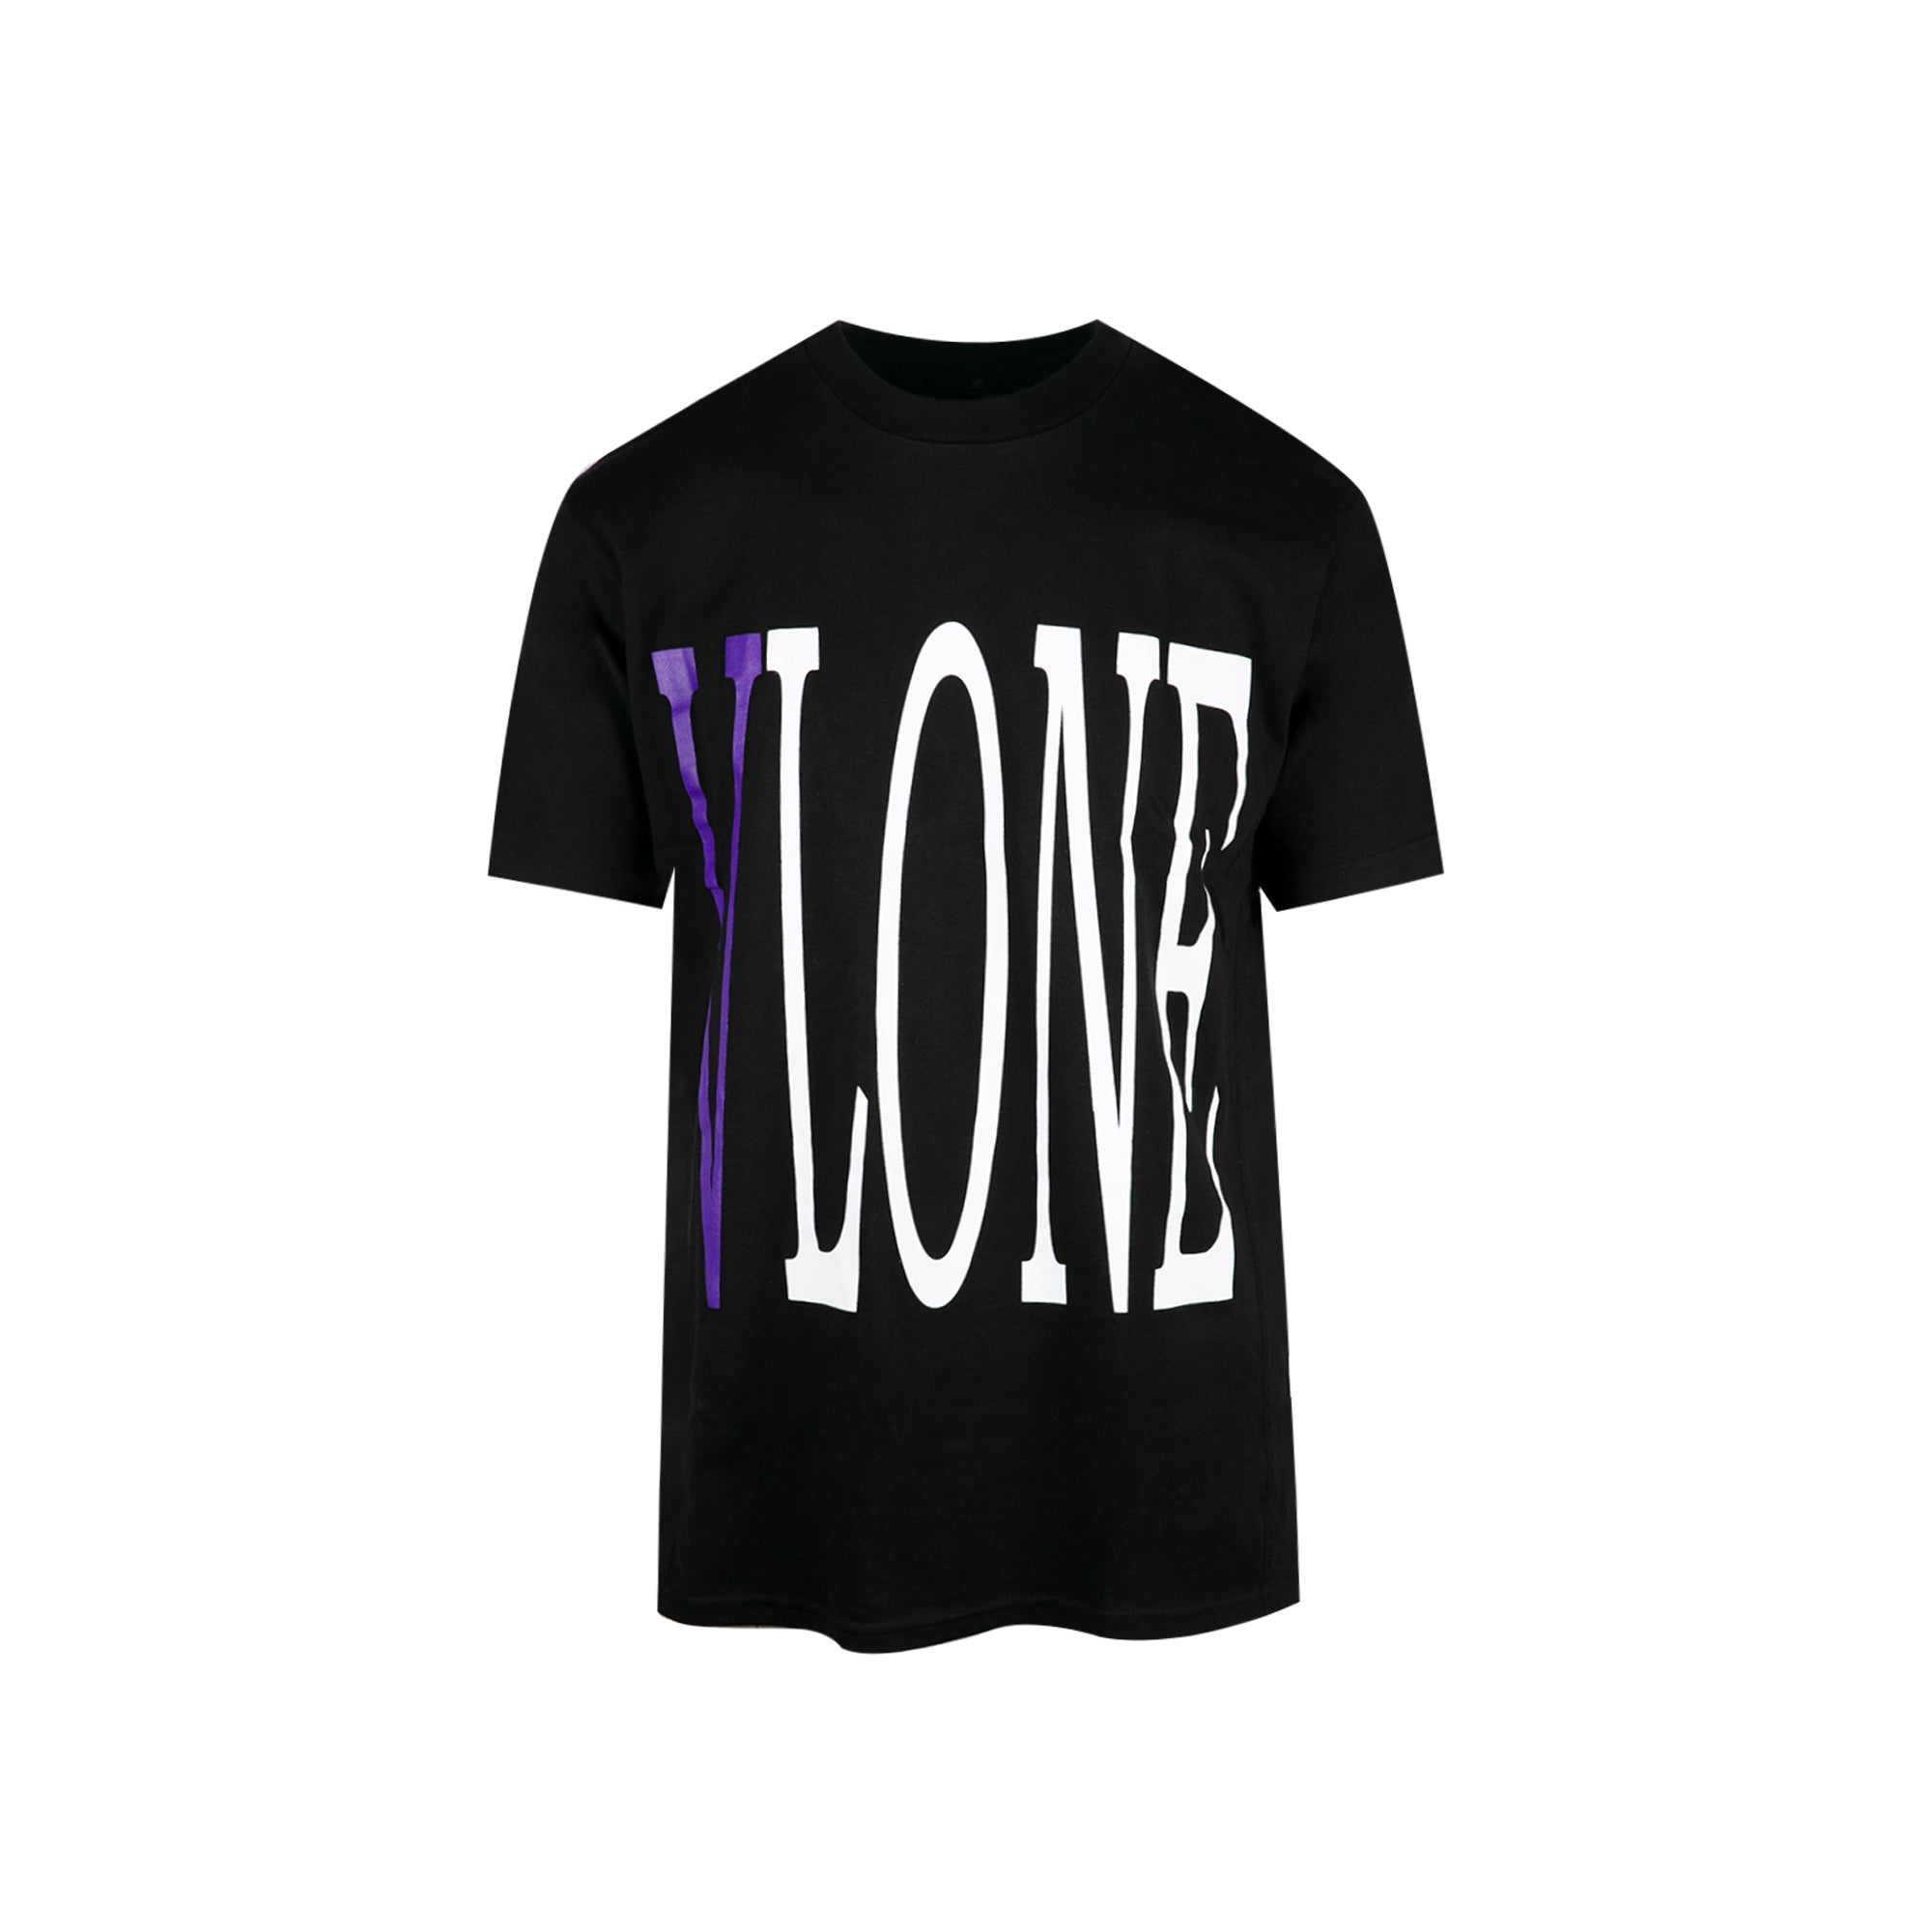 Vlone Staple Cotton Black/ Purple T-Shirt